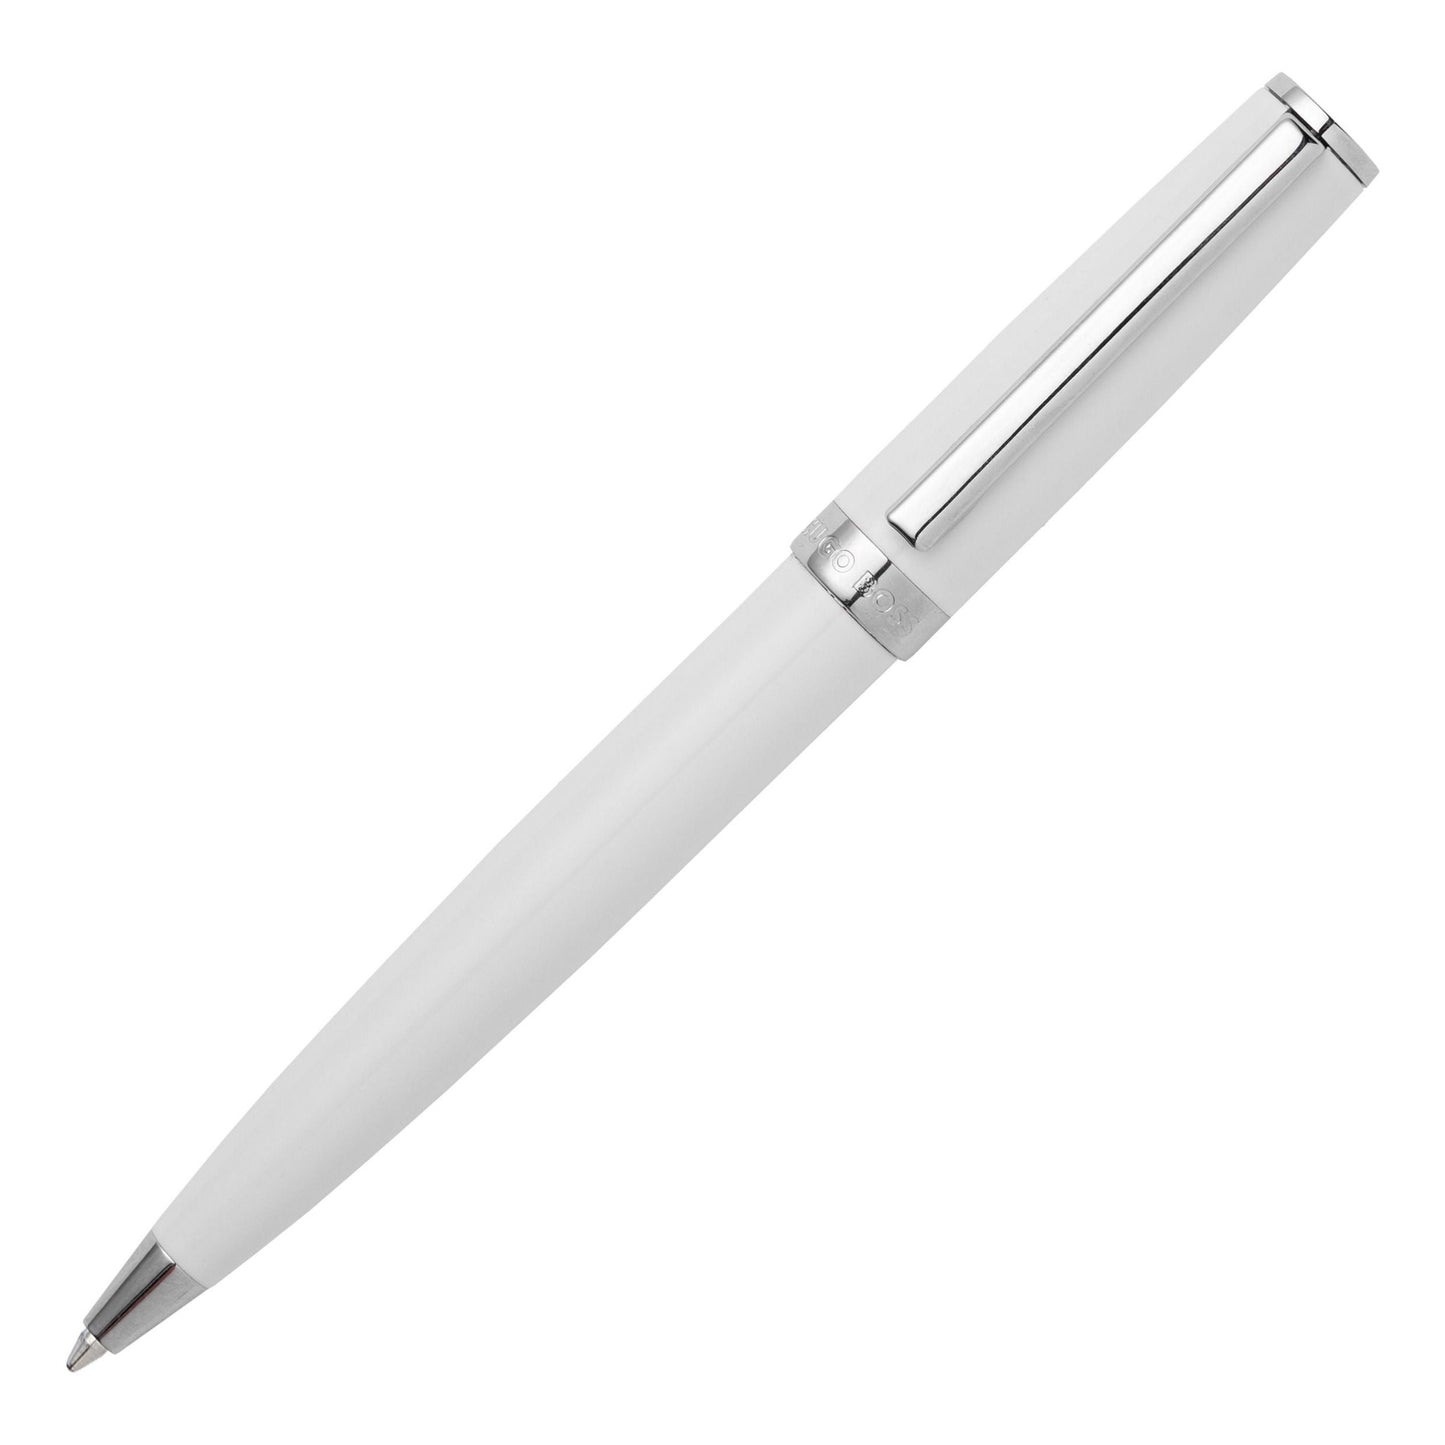 Hugo Boss White & Chrome Classic Polished Ballpoint Pen